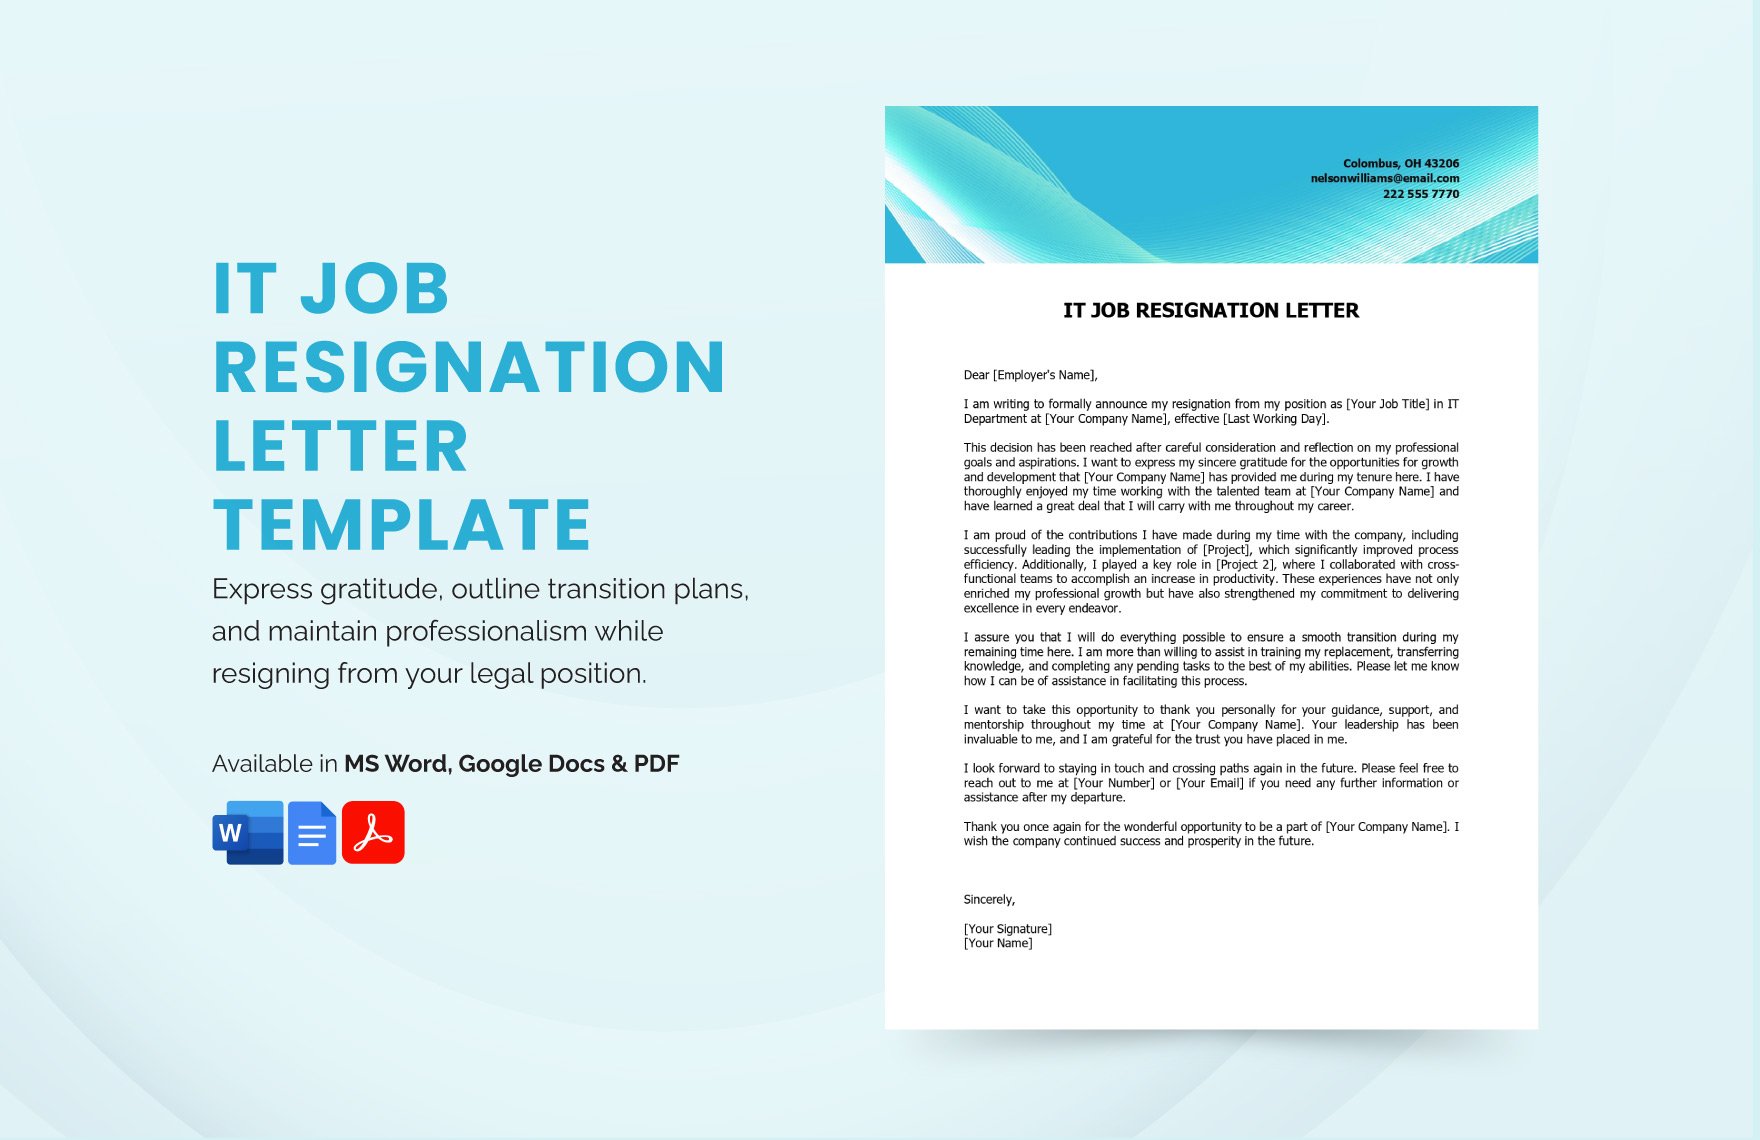 IT Job Resignation Letter Template in Word, Google Docs, PDF